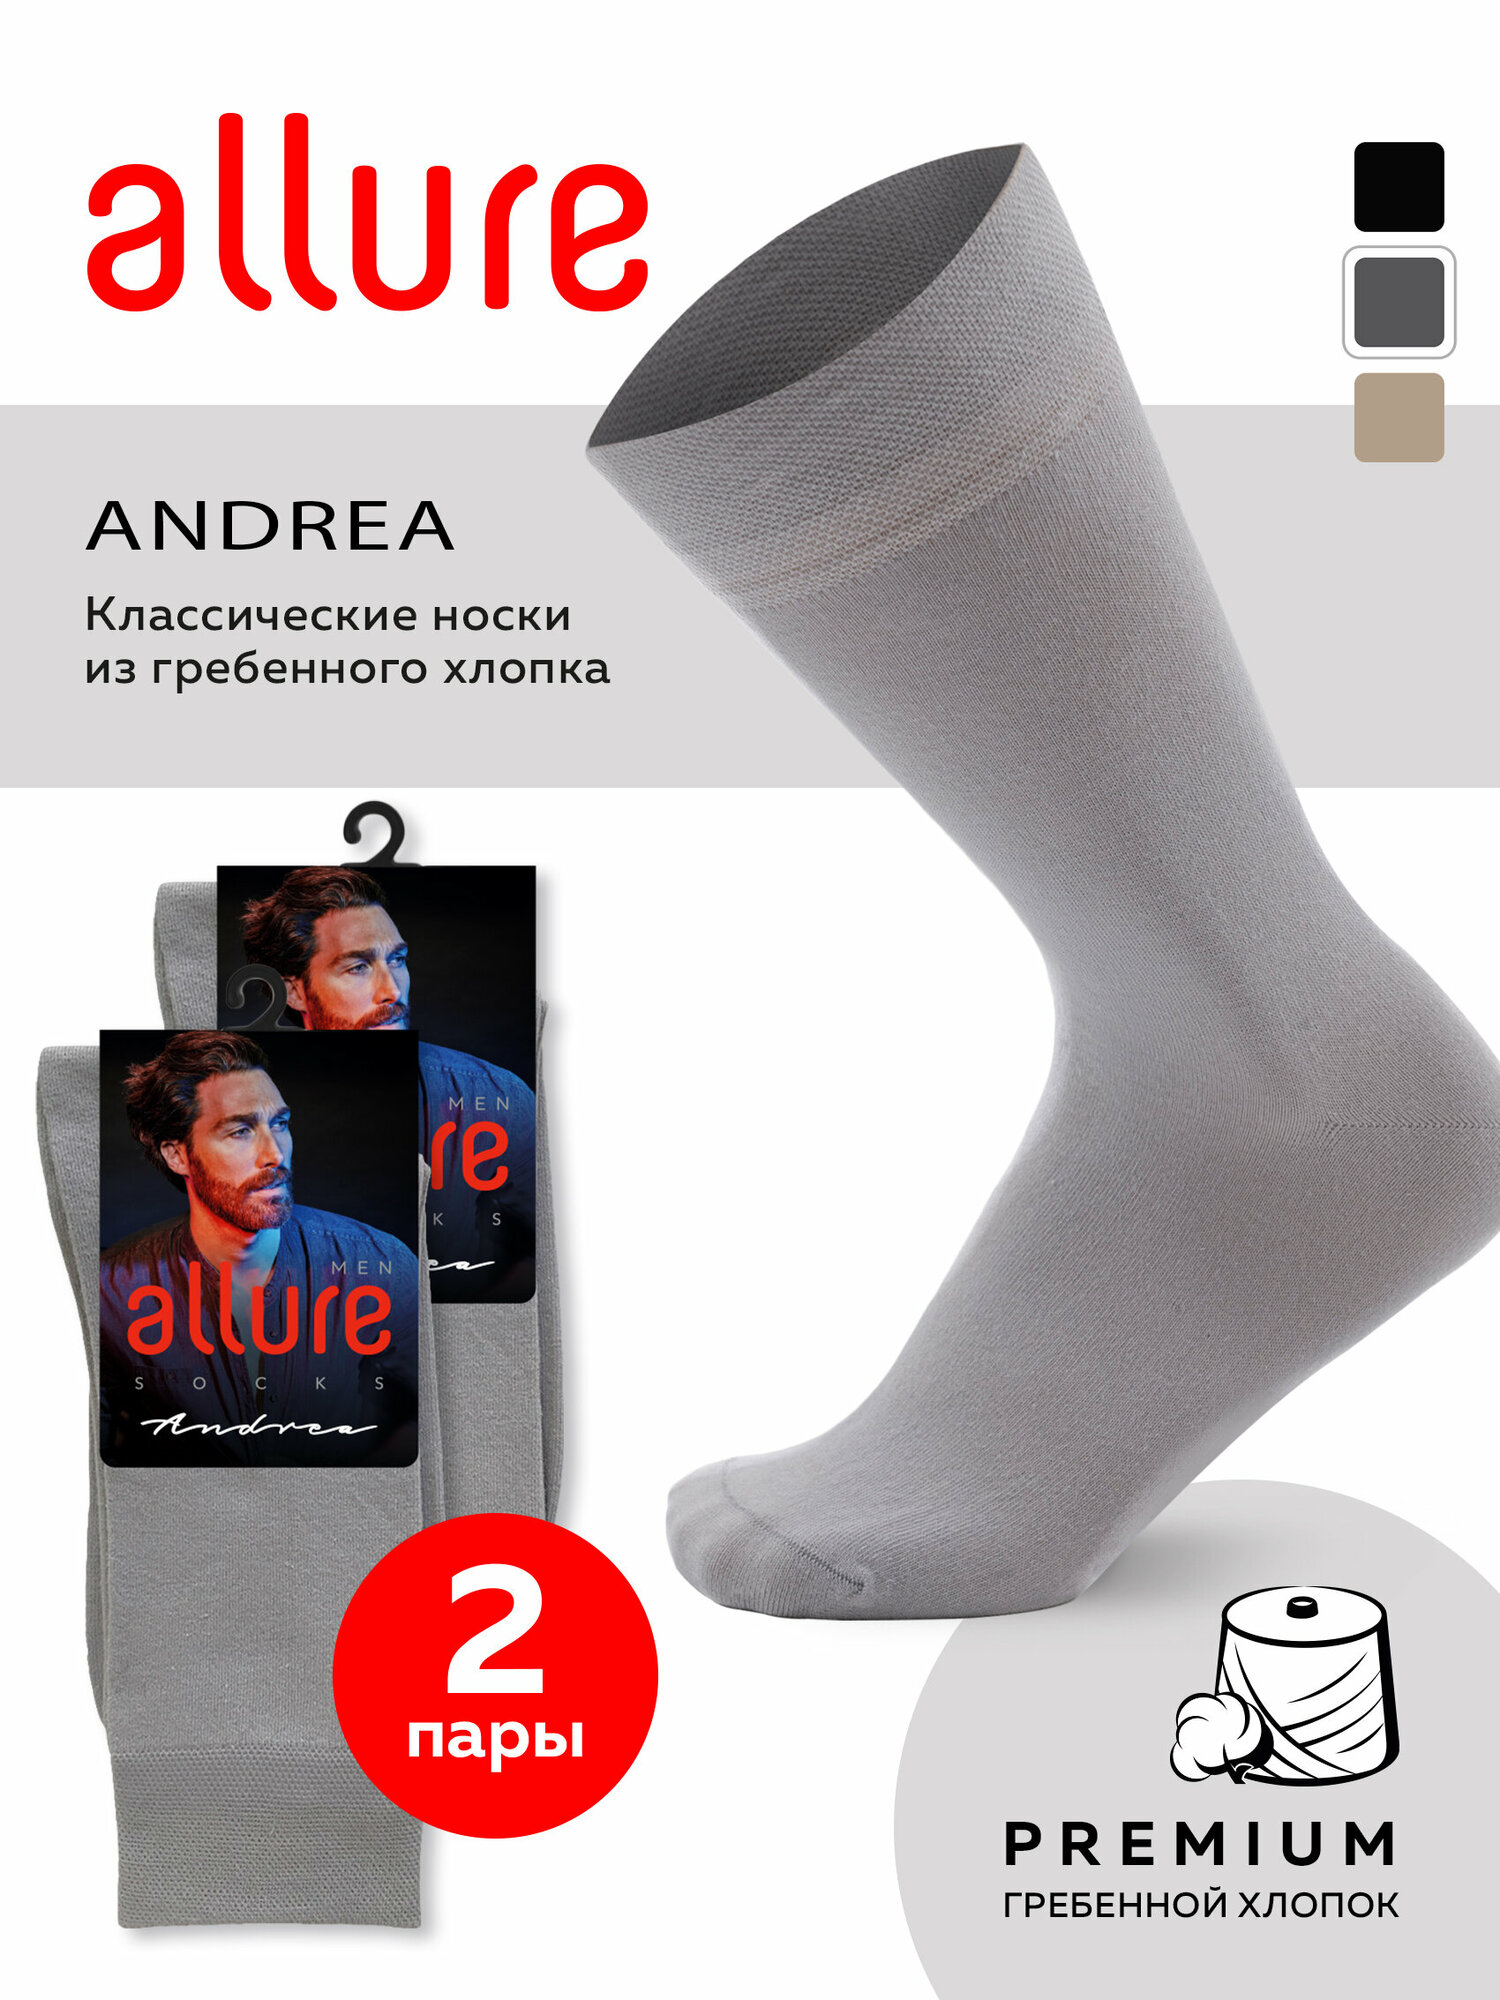 Носки Pierre Cardin, 2 пары, размер 3 (39-41), серый